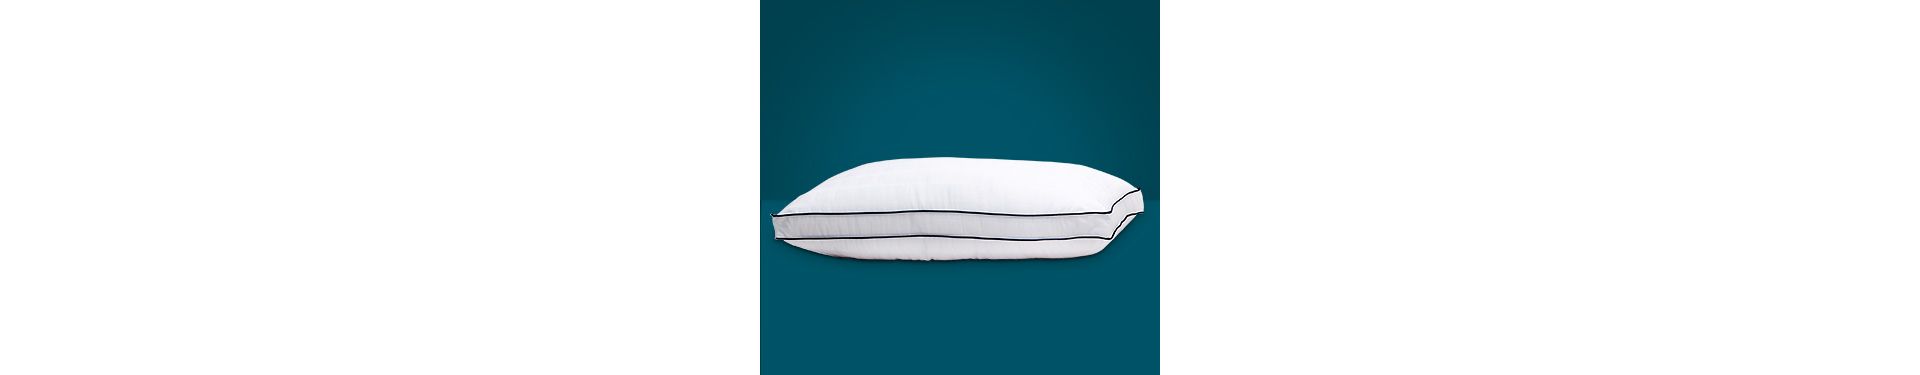 Decorative Image of Jumbo Pillow